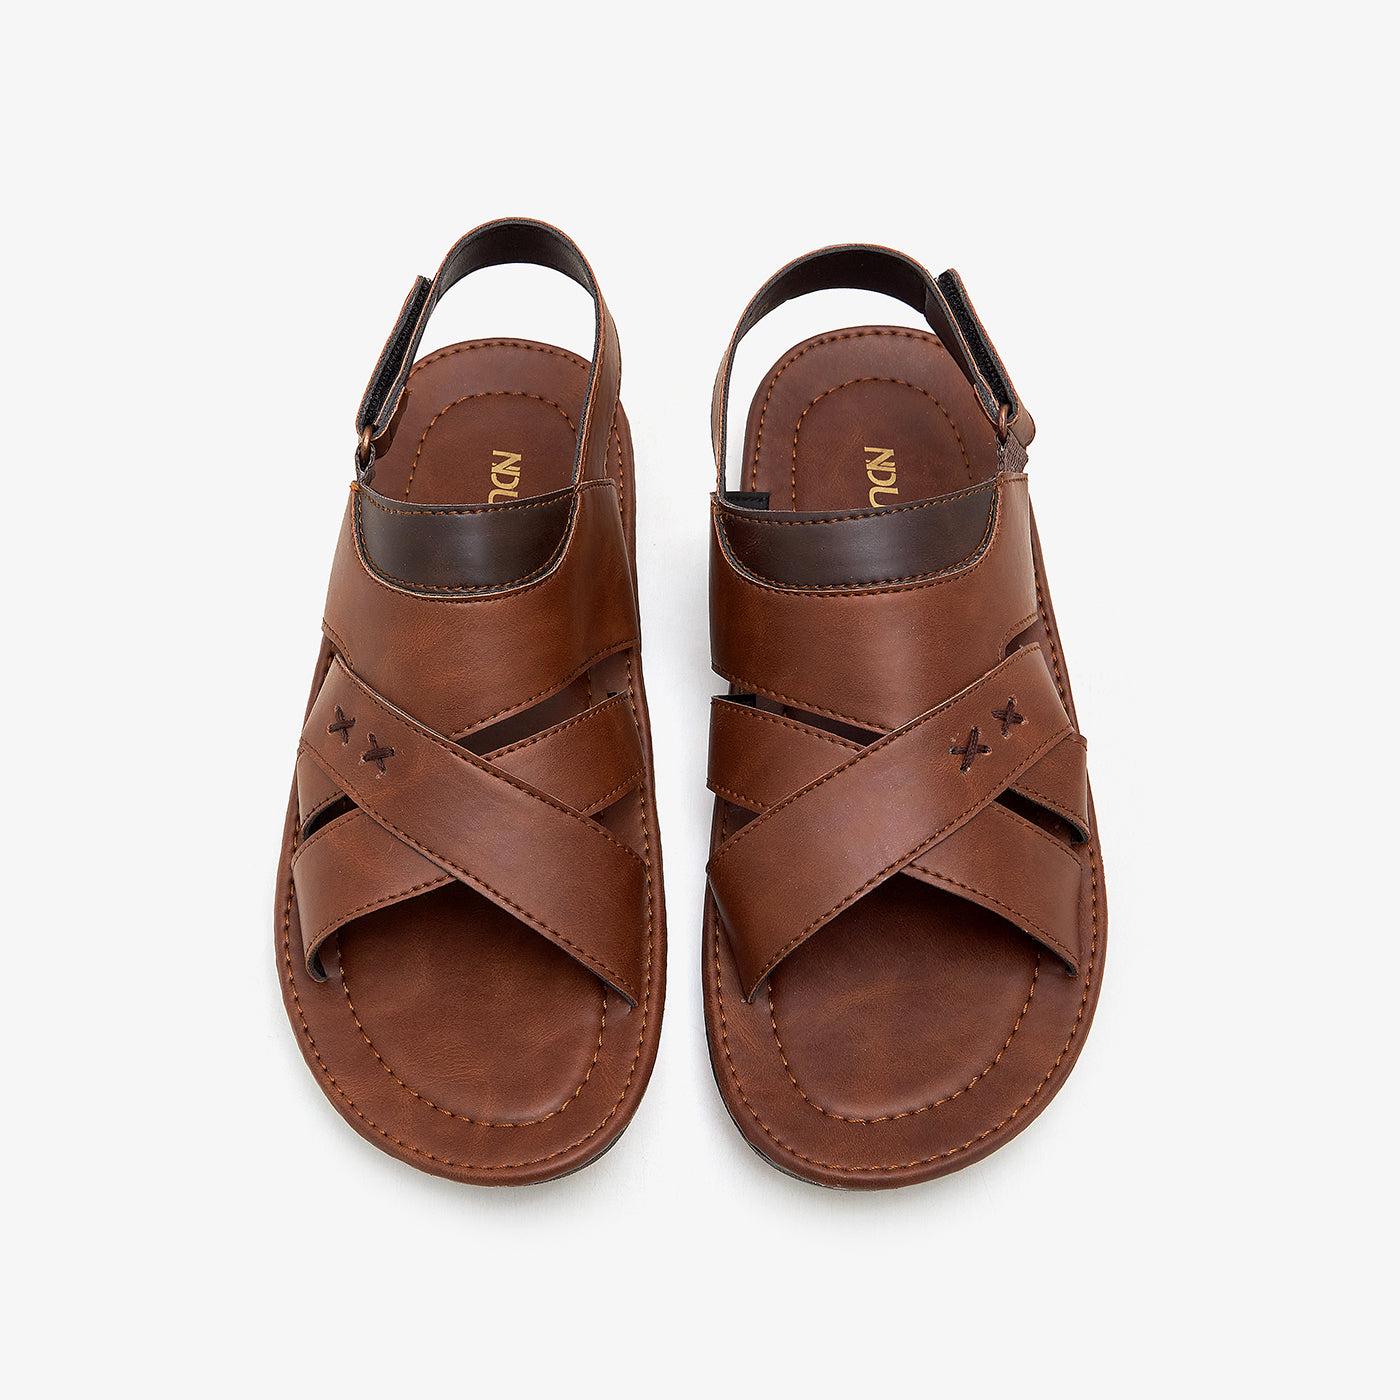 Rugged Men's Sandals